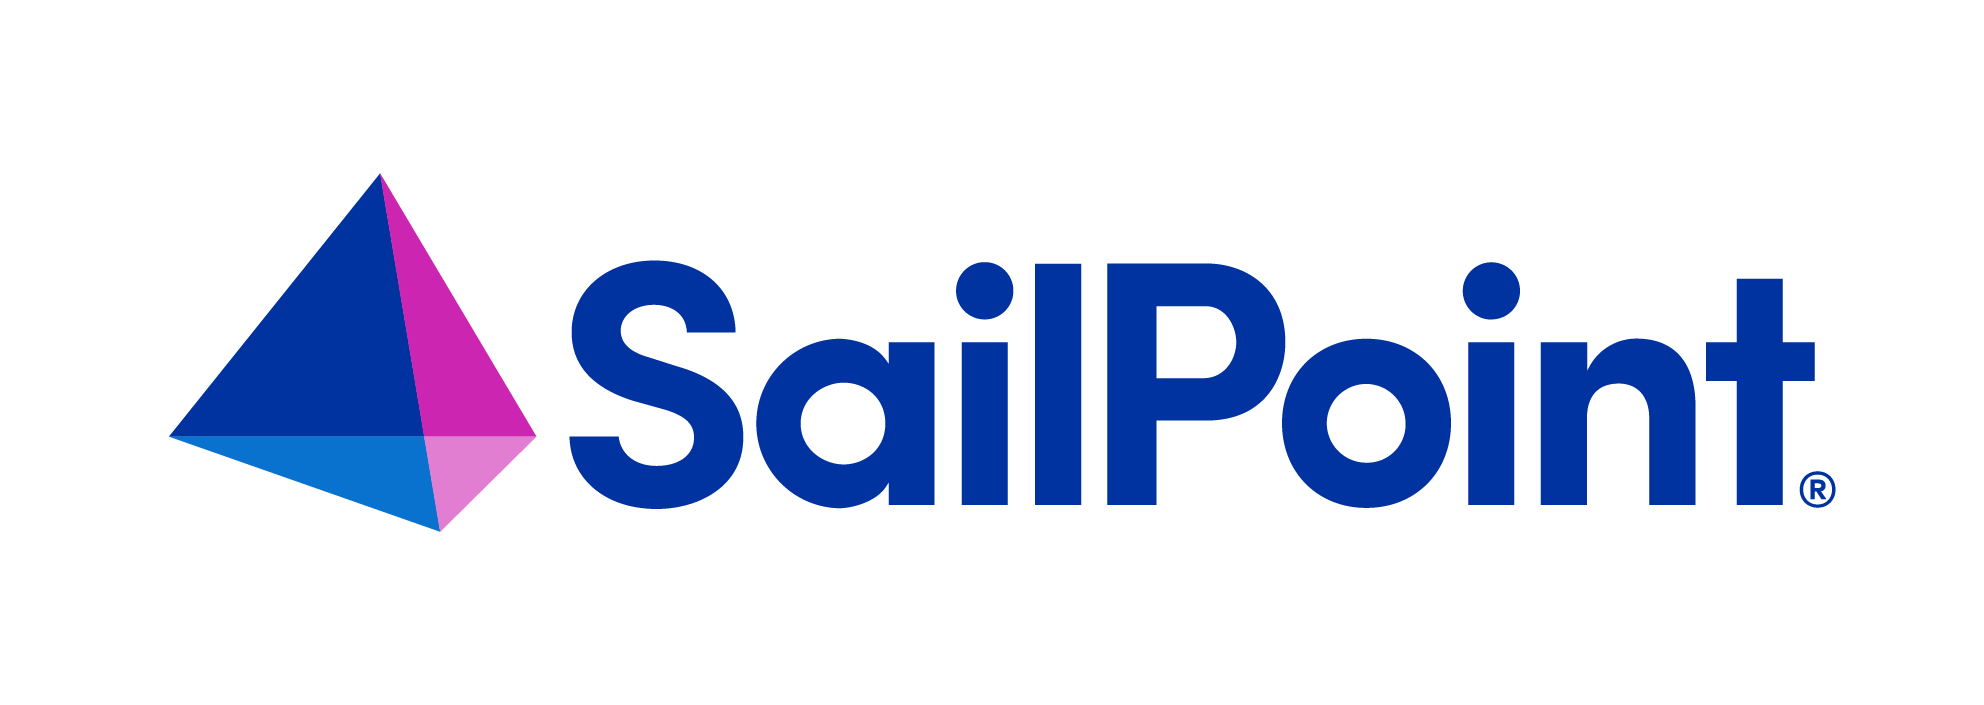 SailPoint | Identity Security for the Cloud Enterprise